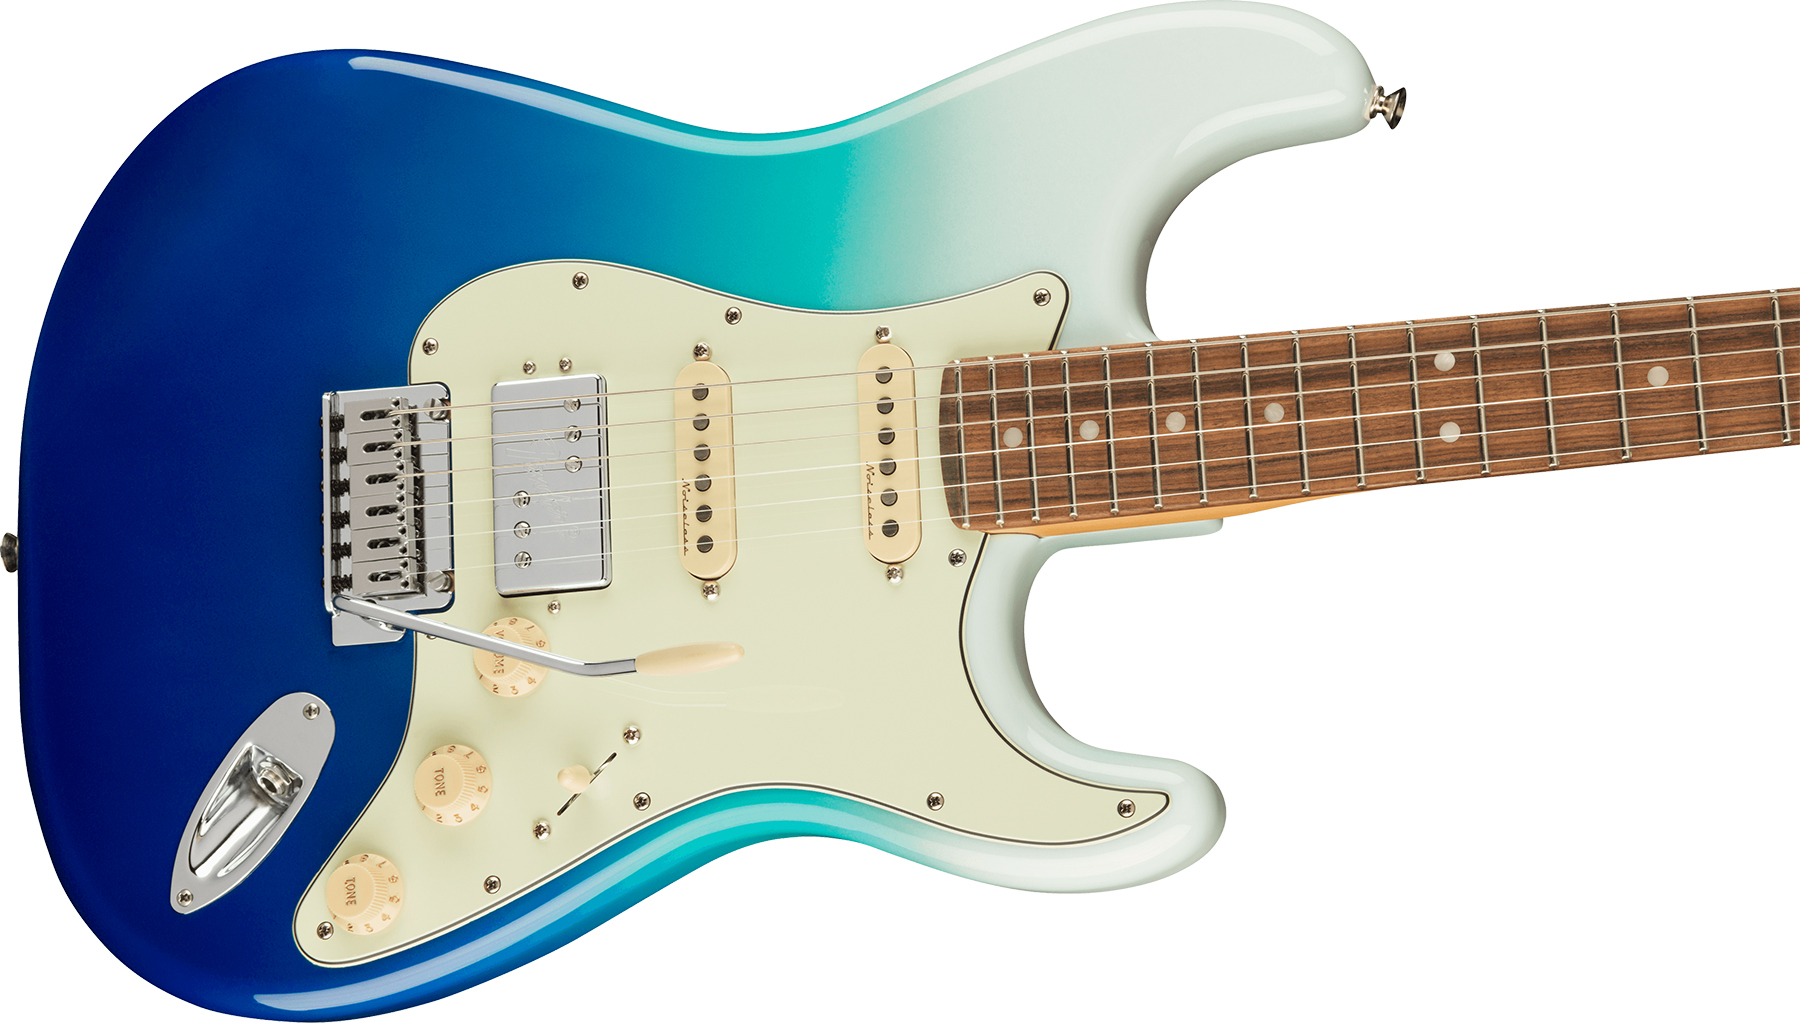 Fender Strat Player Plus Mex Hss Trem Pf - Belair Blue - Str shape electric guitar - Variation 2